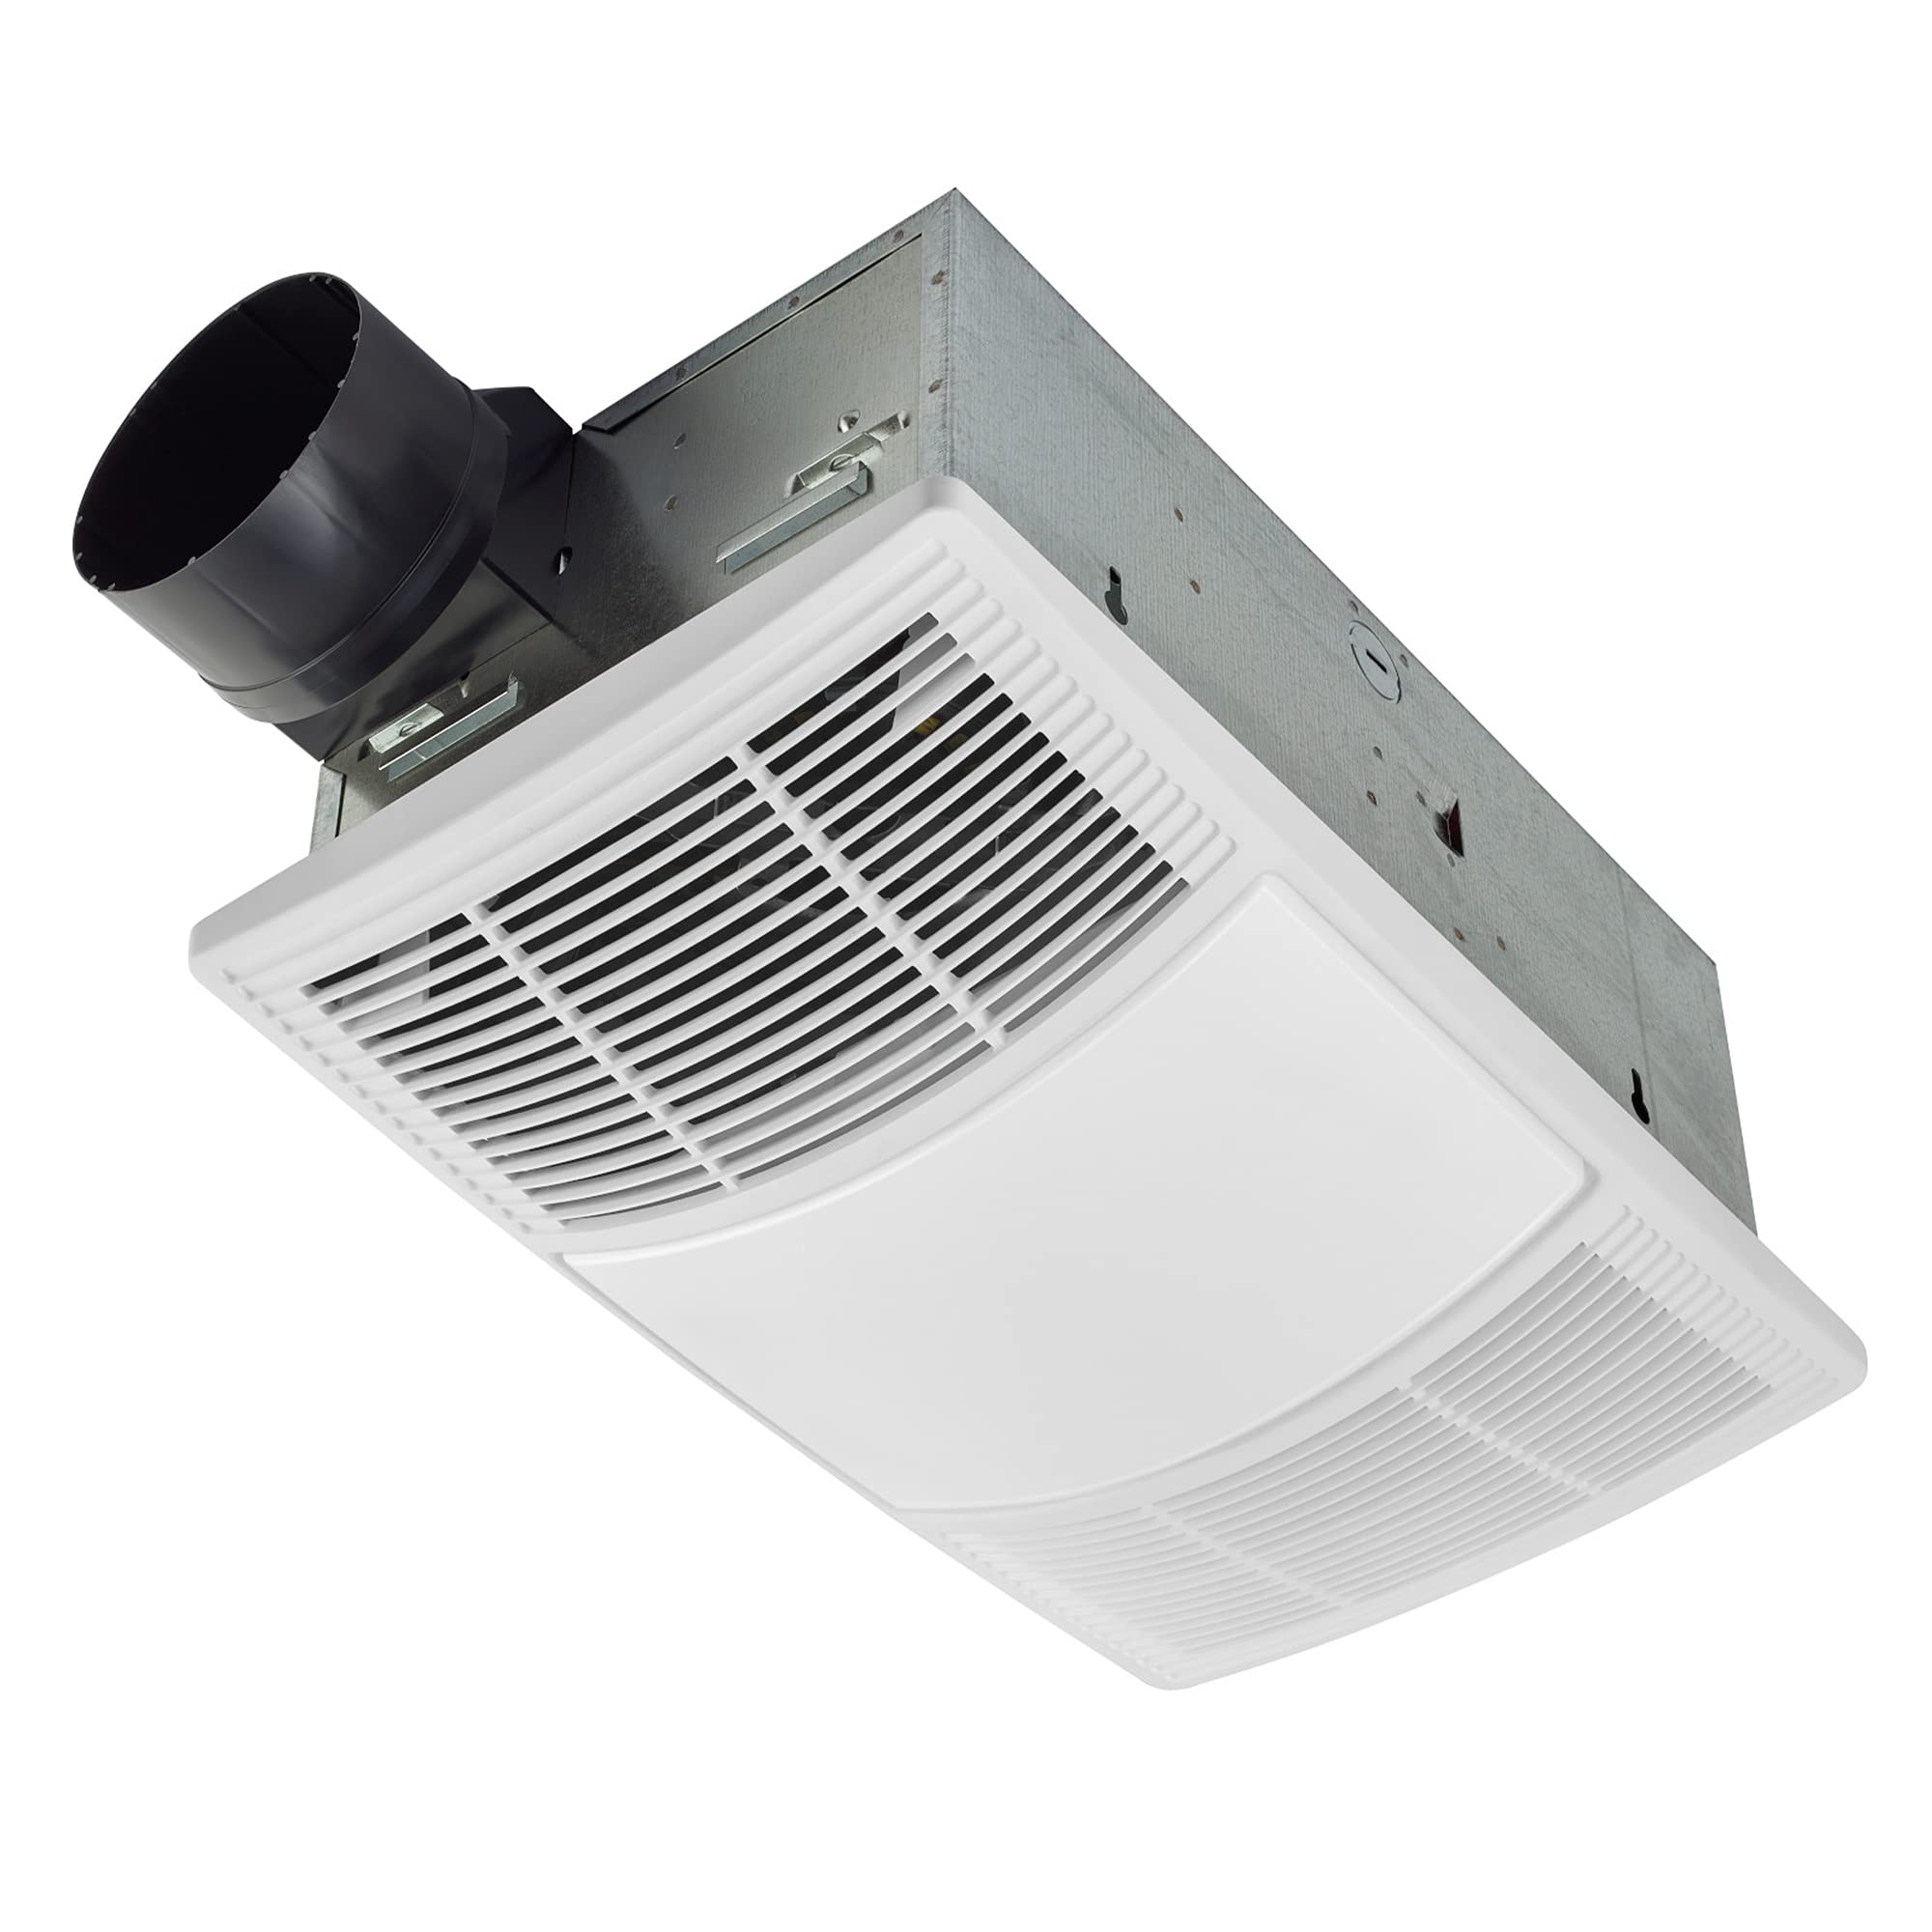 Broan-NuTone BHF80 Non-Lit PowerHeat Bathroom Exhaust Fan and Heater, 80 CFM, 1.5 Sones, White